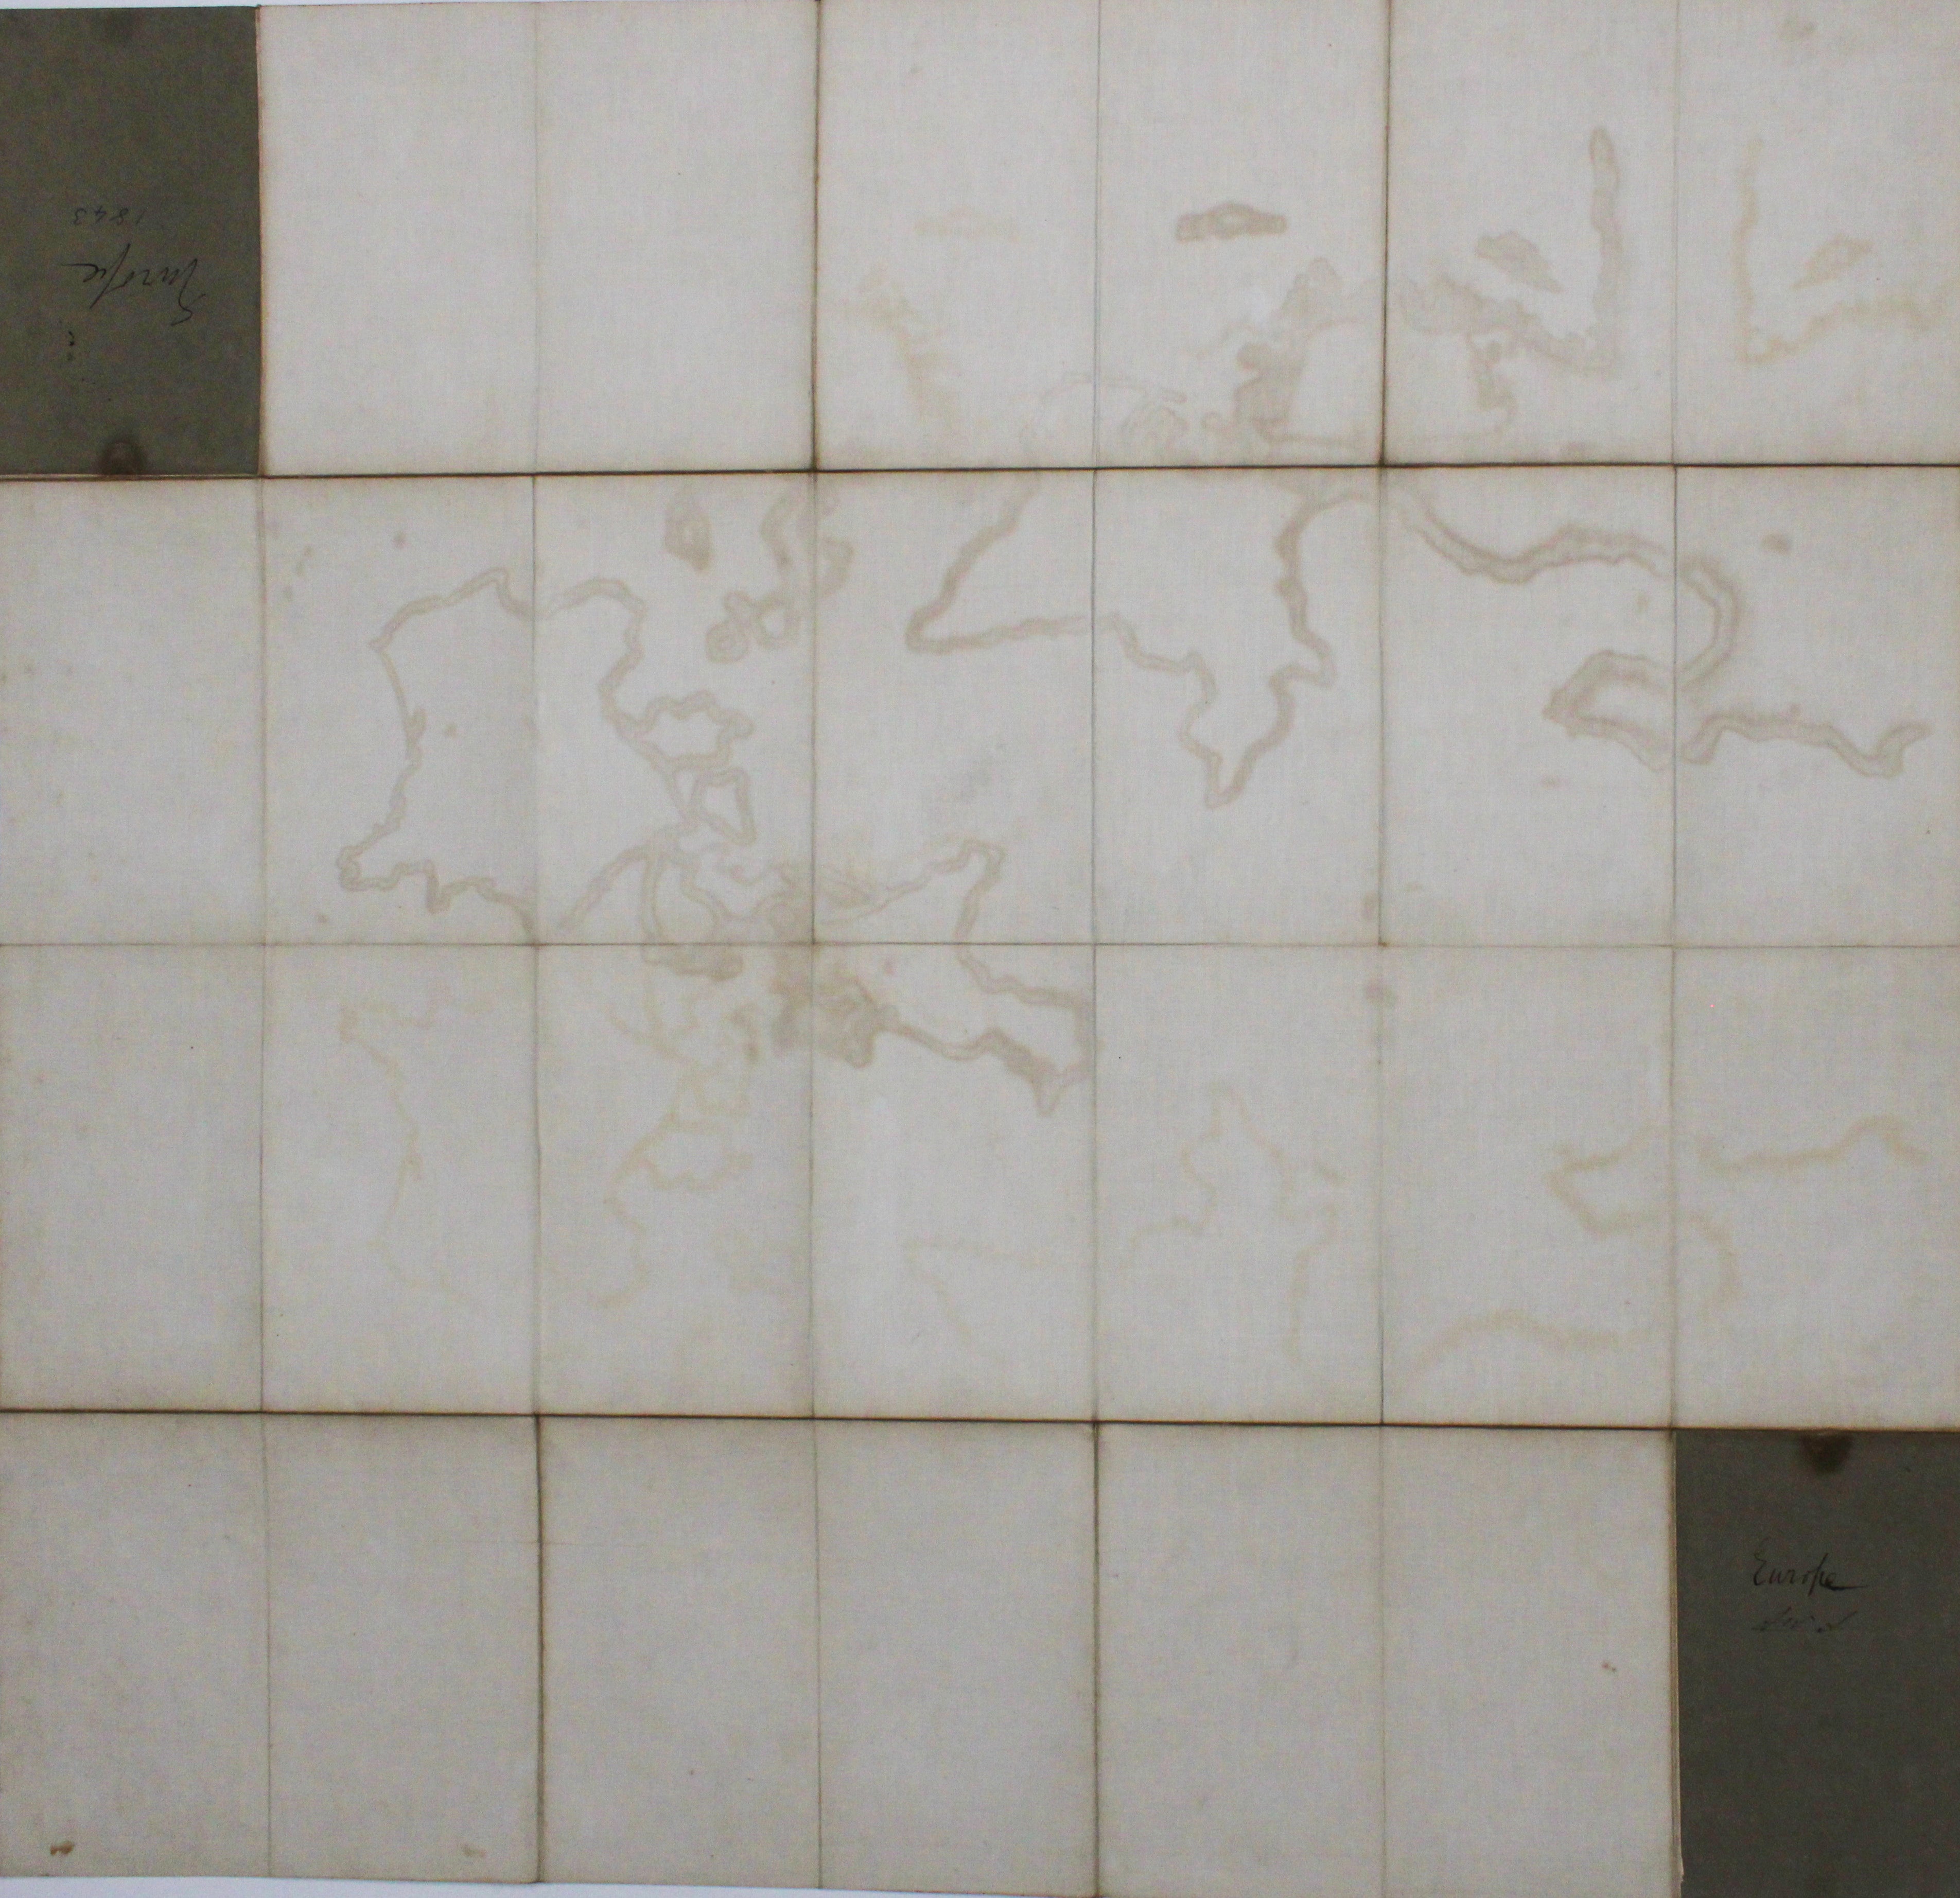 Smith's Folding Map of Europe